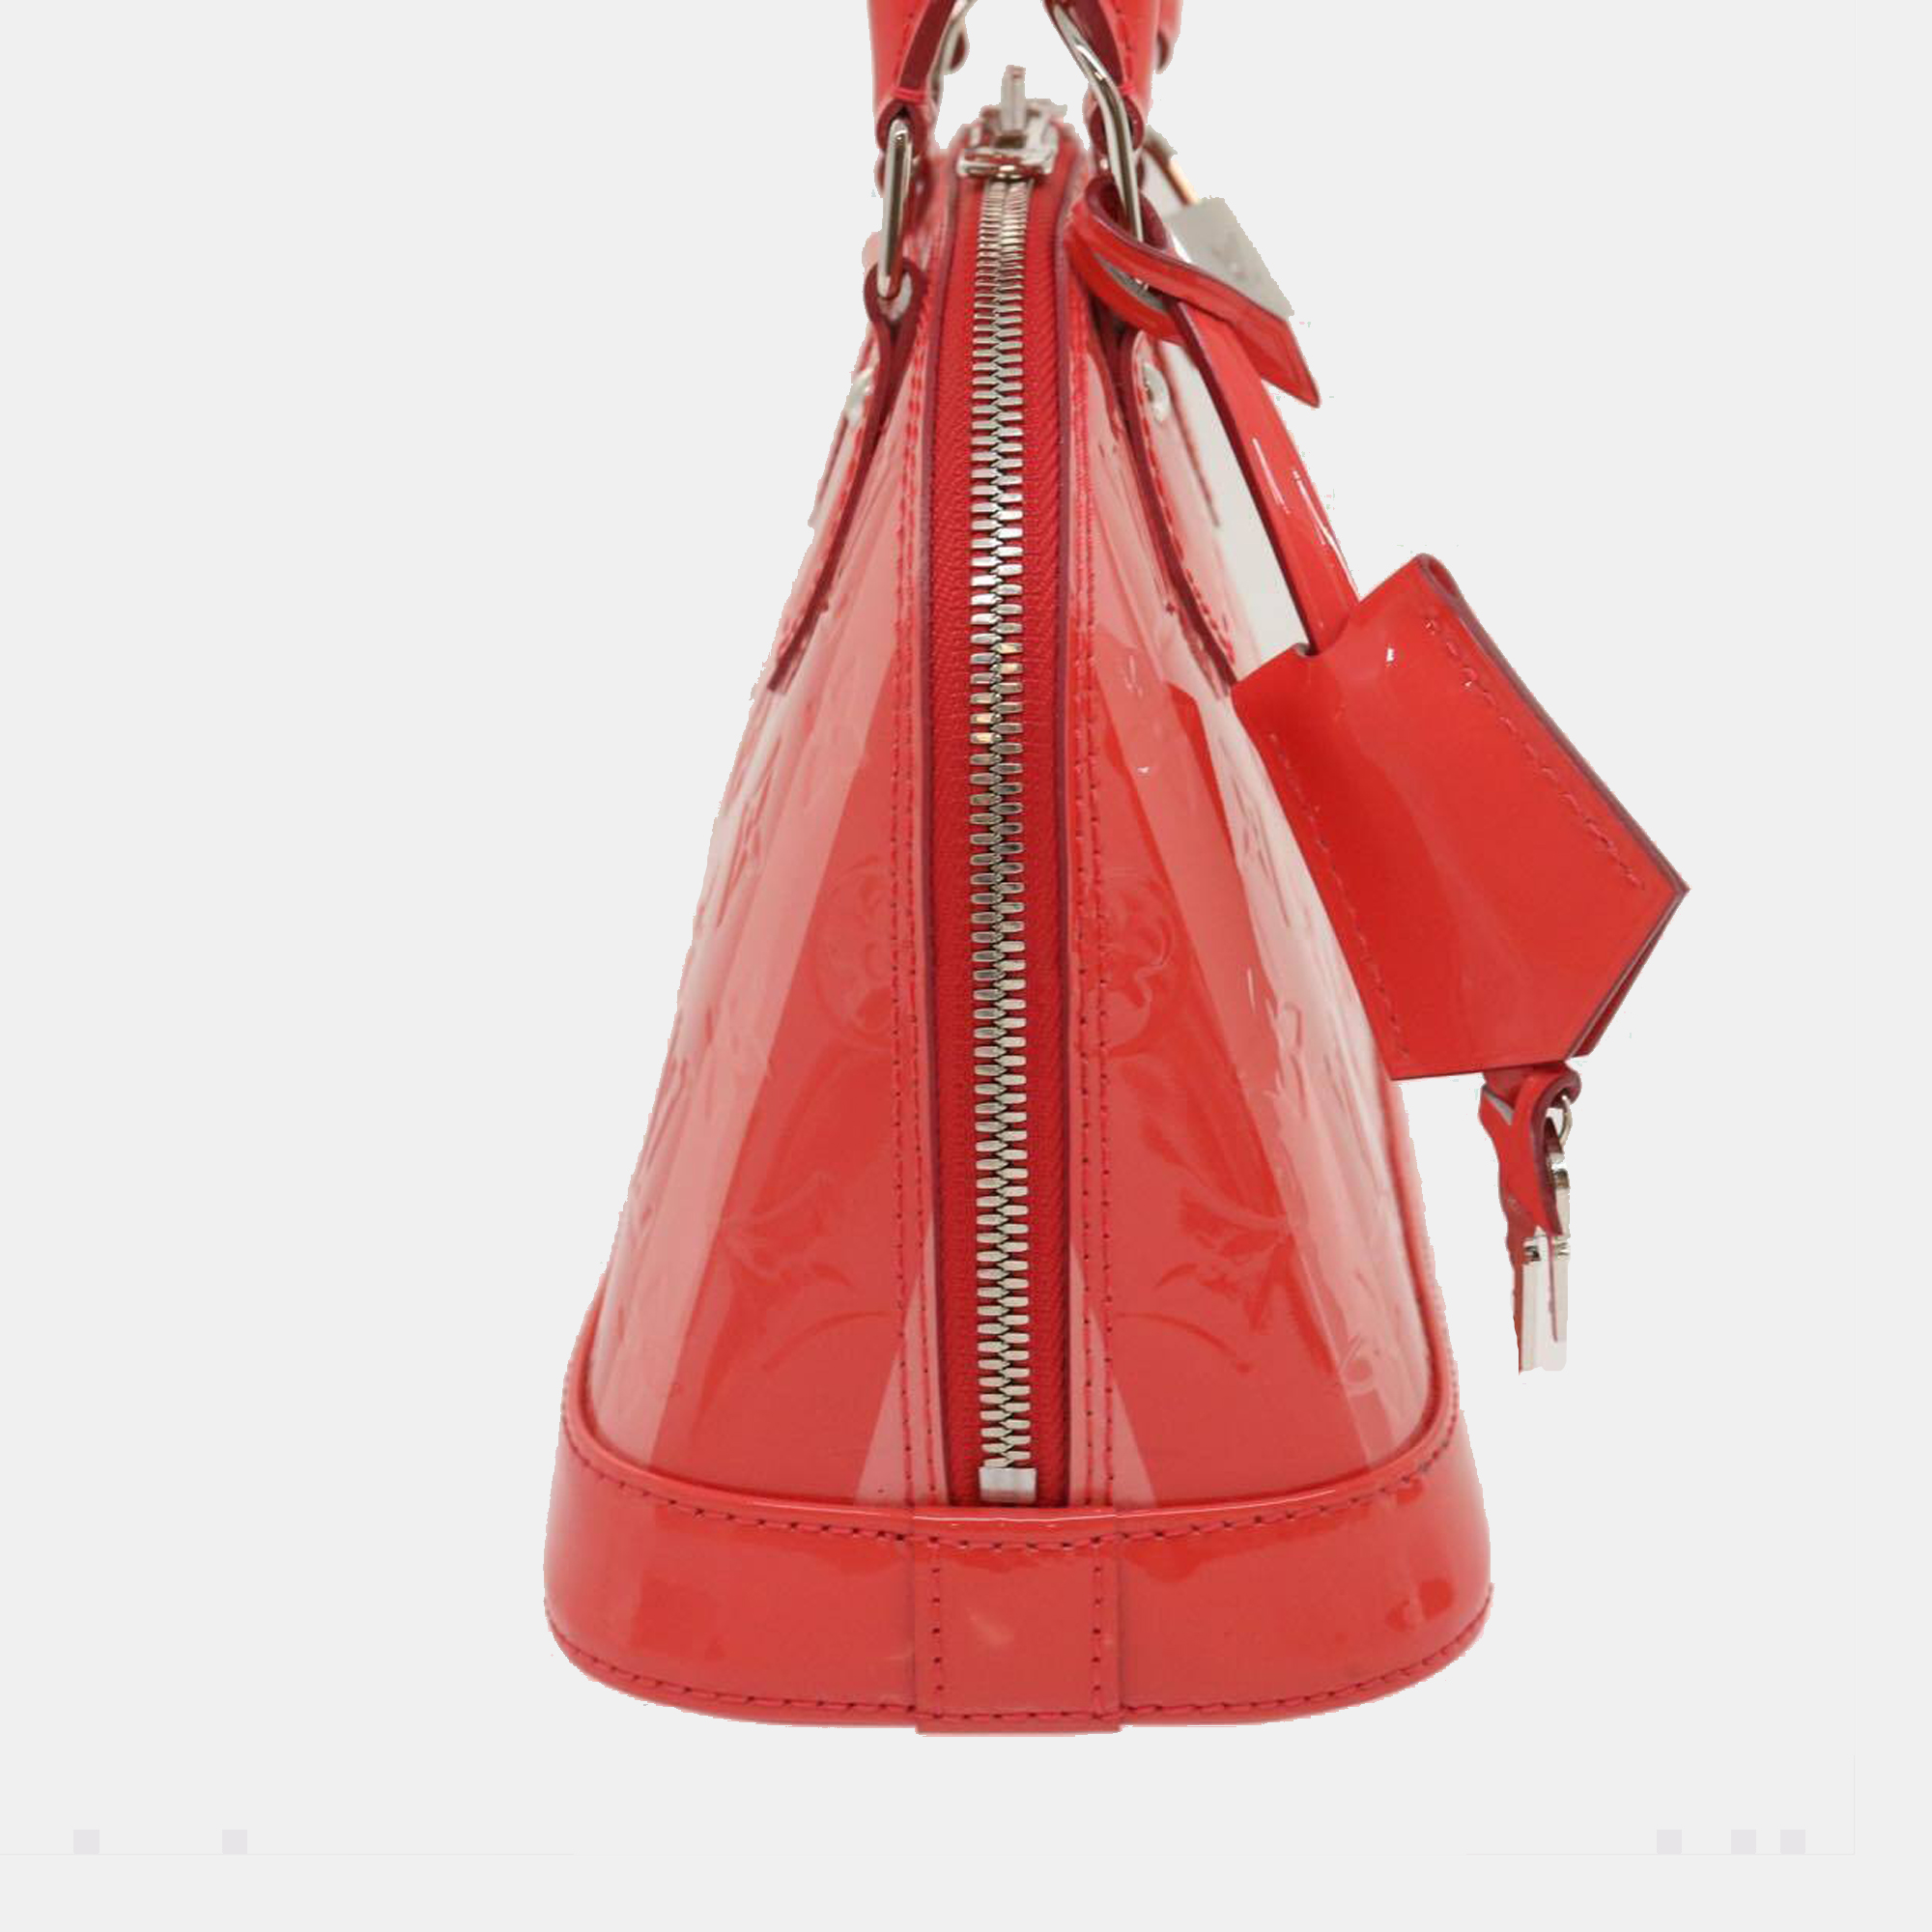 Louis Vuitton, Bags, Louis Vuitton Red Patent Leather Bag